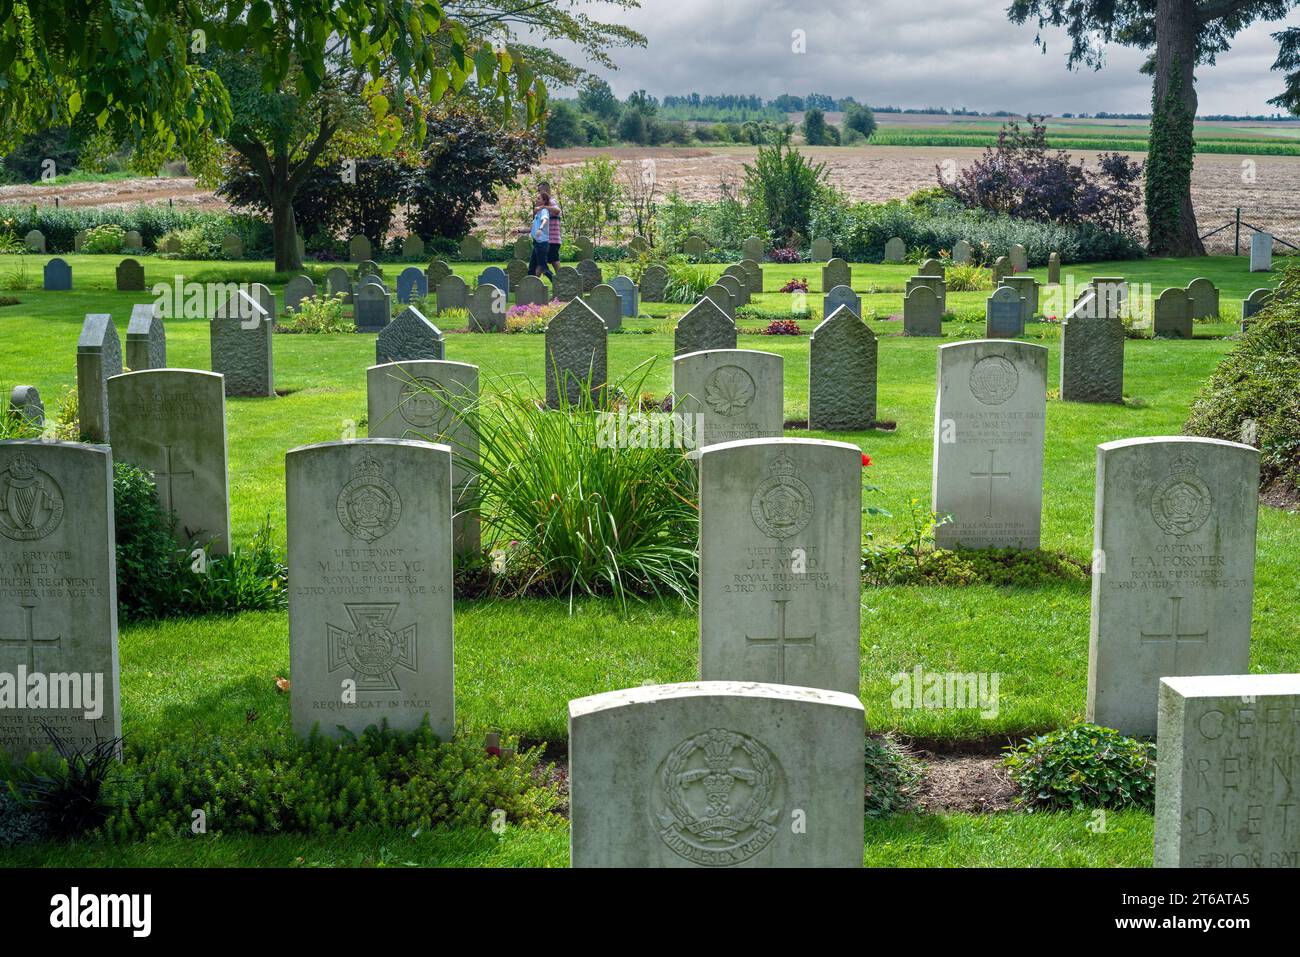 British WWI headstones at the St. Symphorien Military Cemetery, First World War One burial ground at Saint-Symphorien near Mons, Hainaut, Belgium Stock Photo